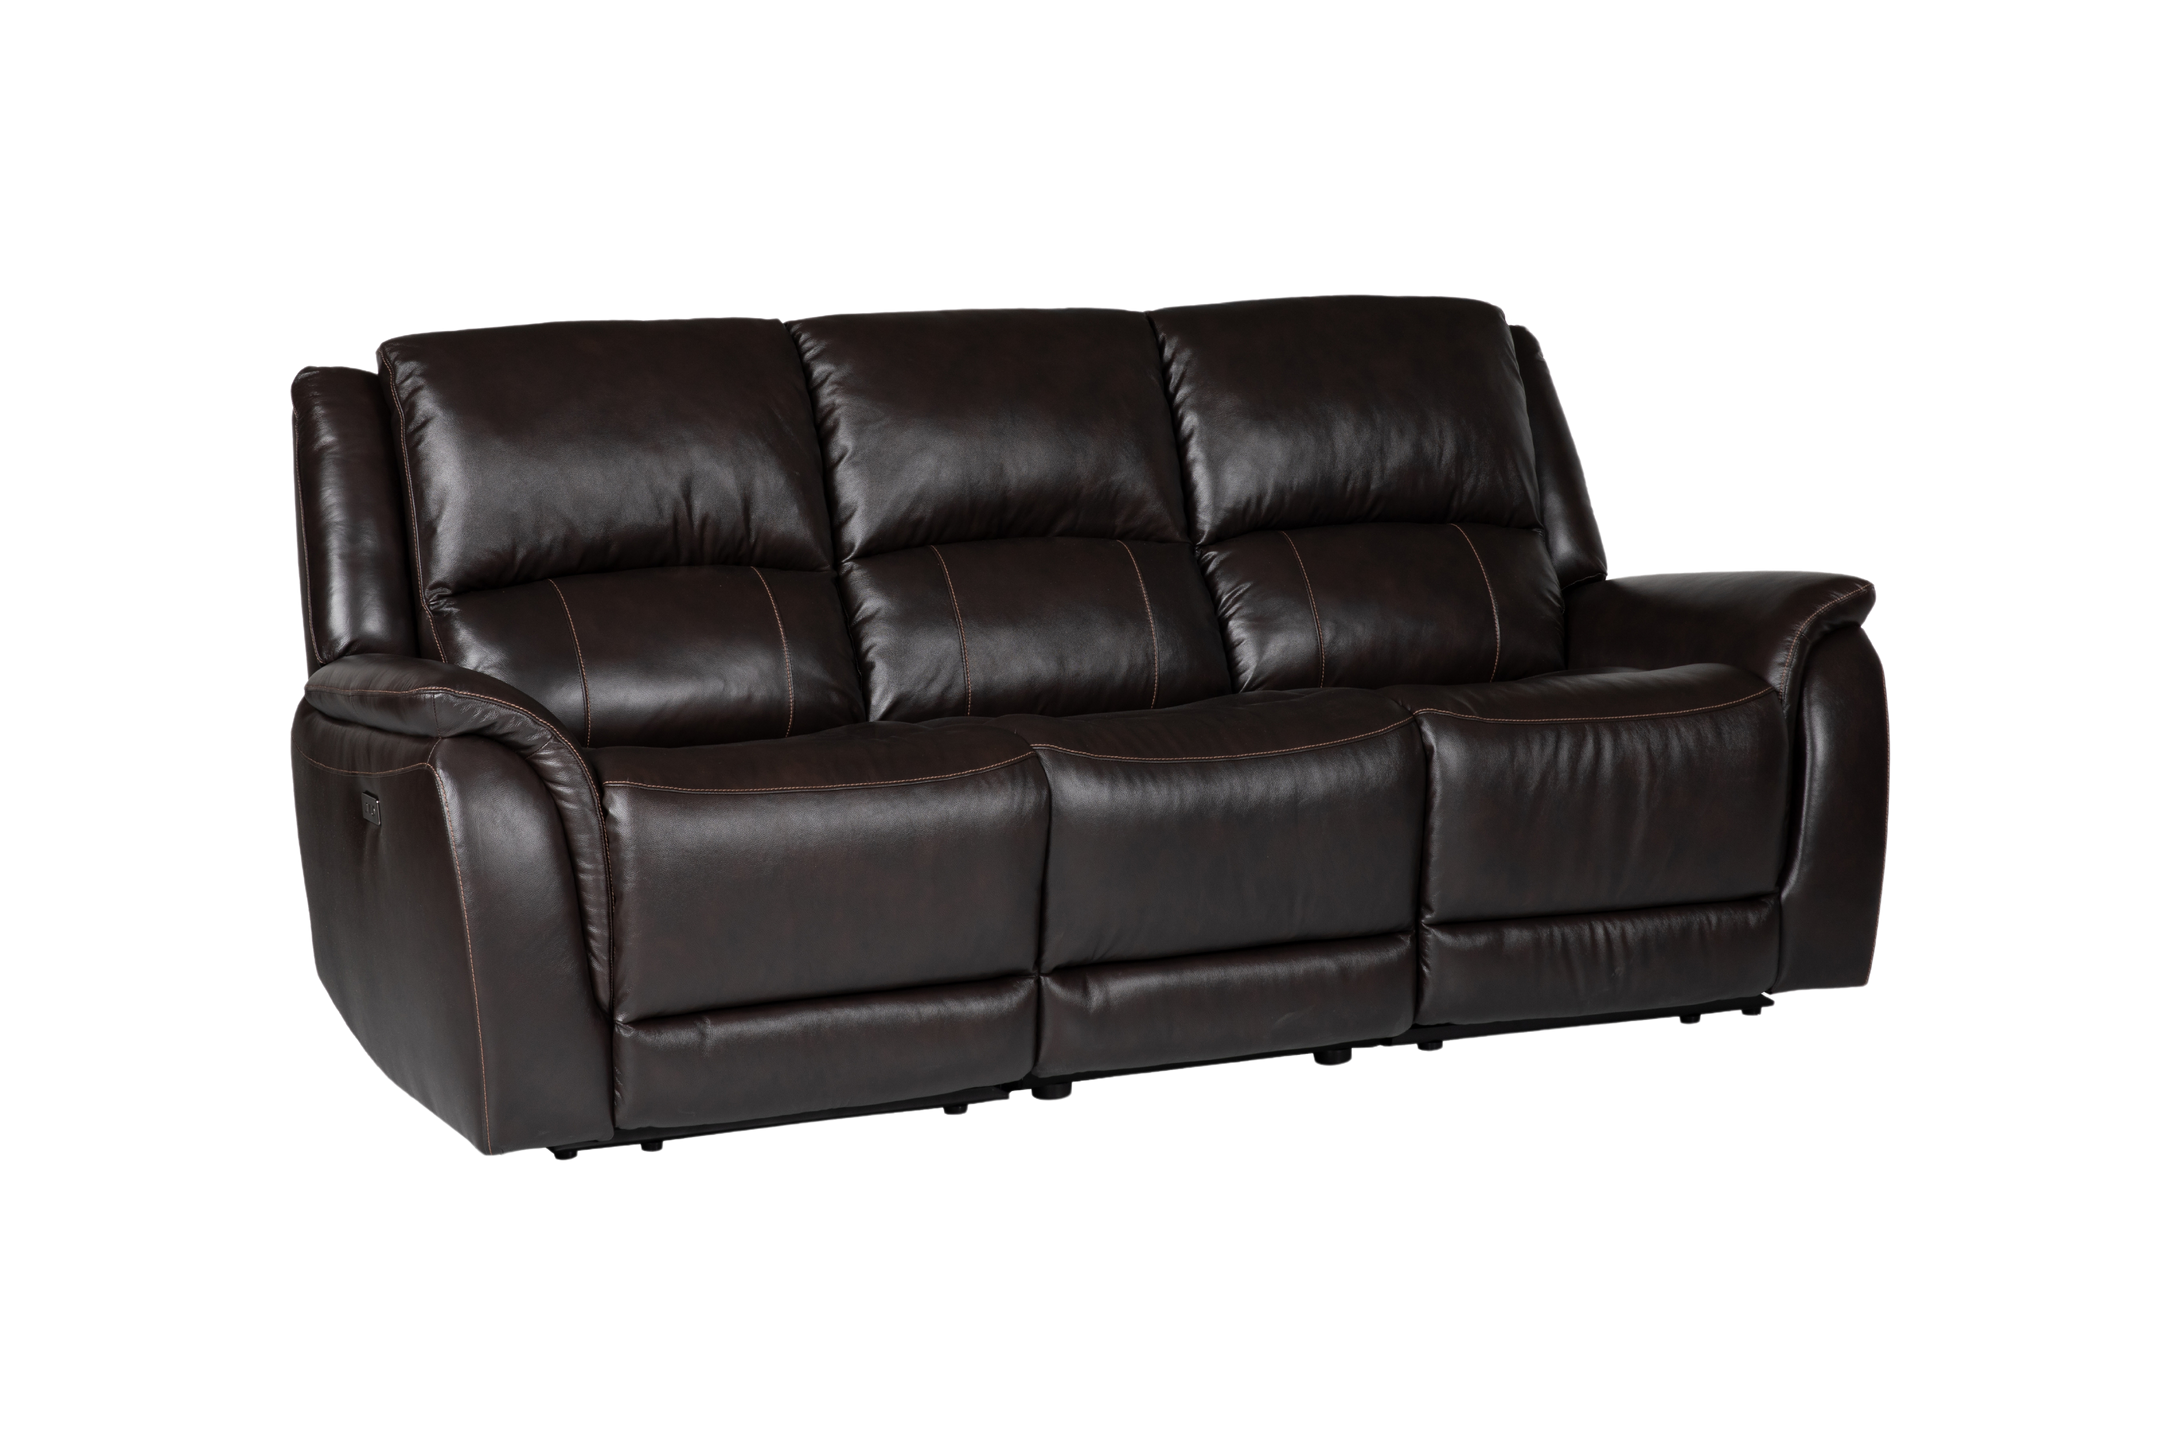 Woodstock Leather Sofa Set - Richicollection Furniture Warehouse